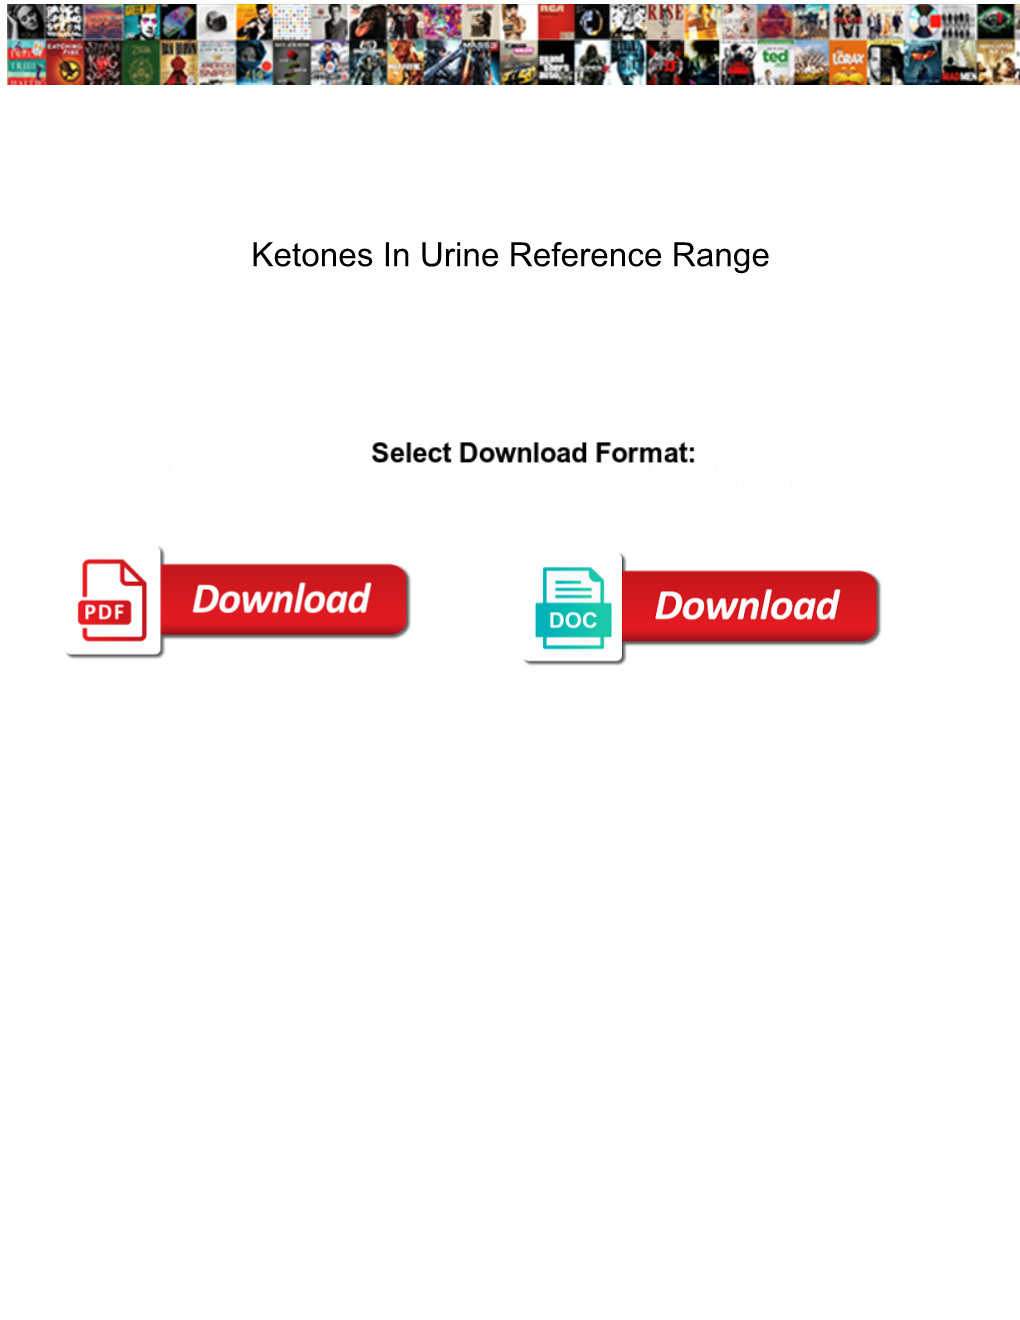 Ketones in Urine Reference Range